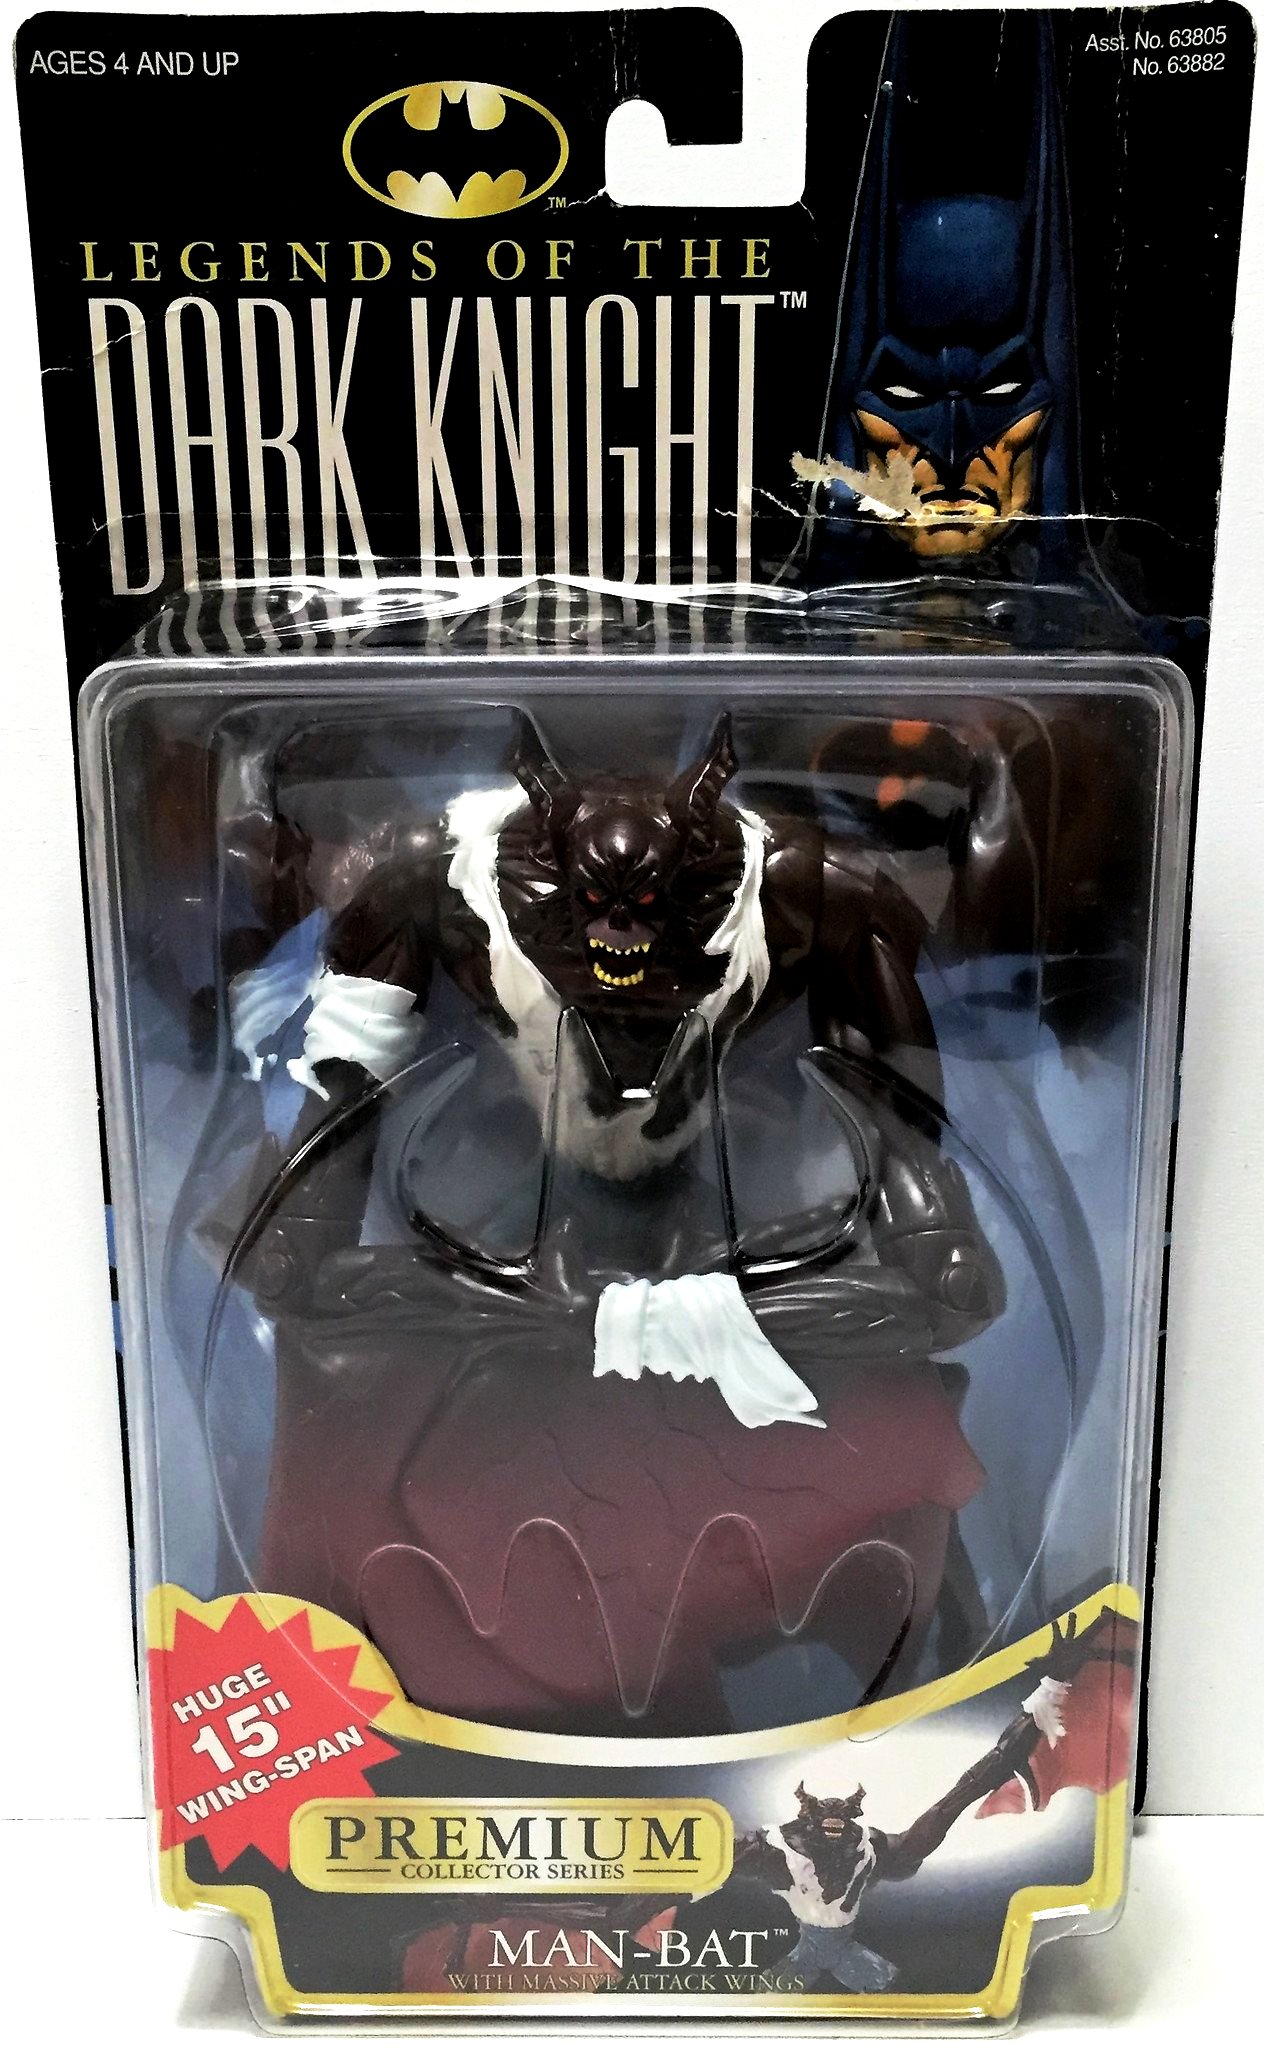 1997 Kenner Man-bat Action Figure Batman Legends of The Dark Knight Premium for sale online 